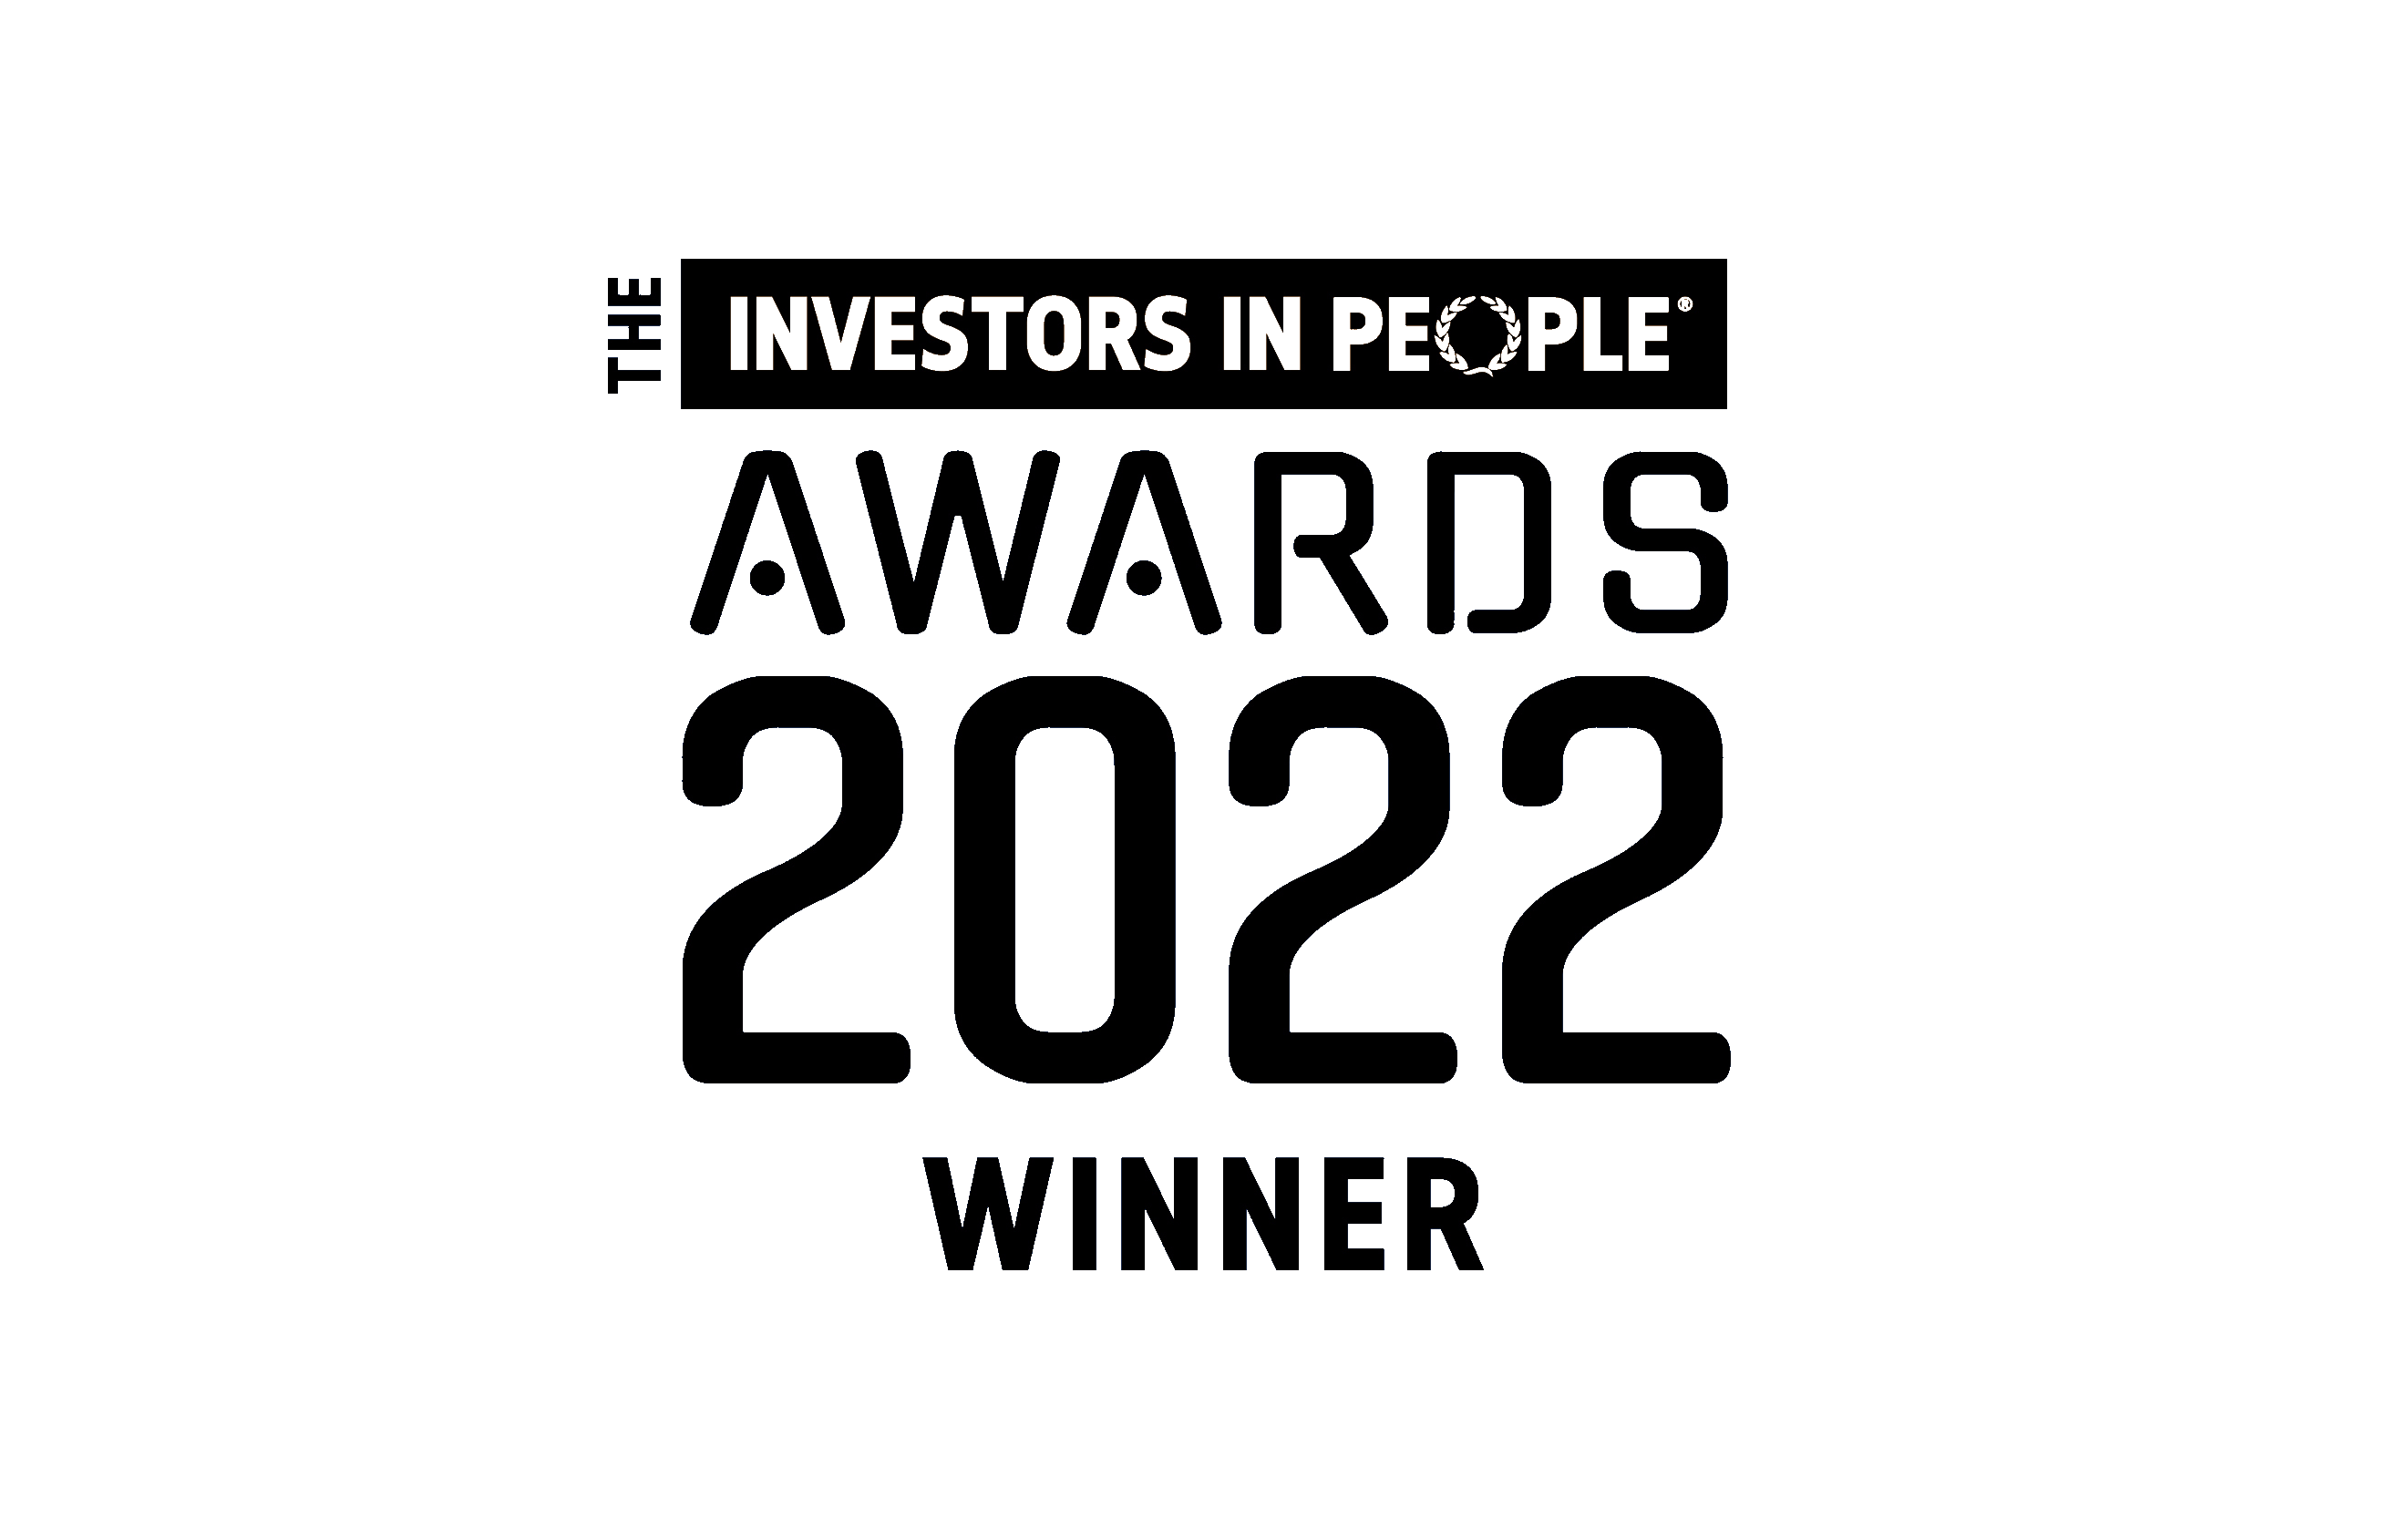 Investors in People Awards 2022 - Black